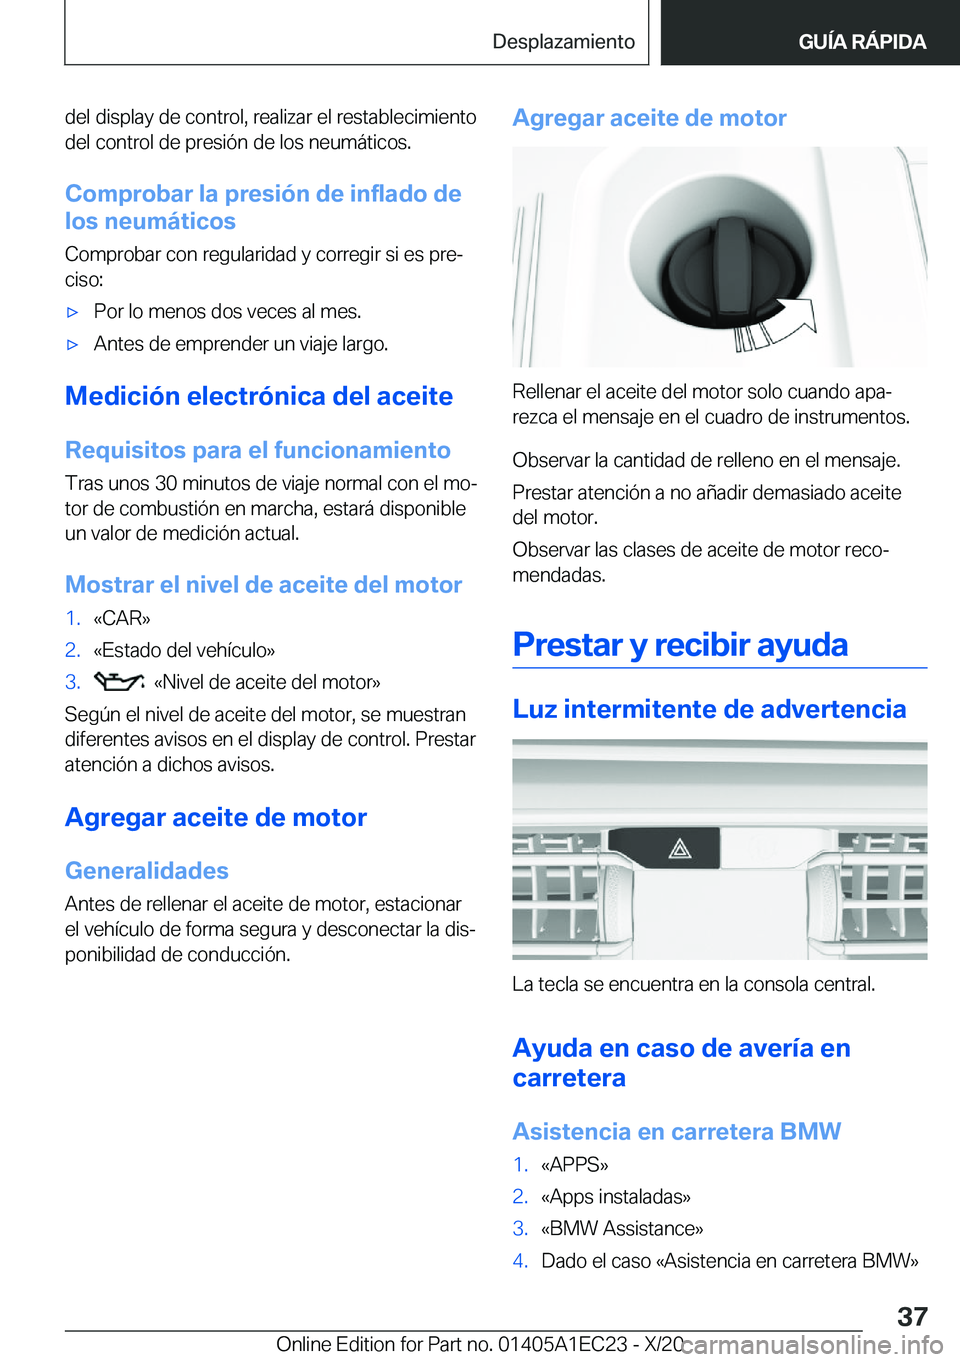 BMW 8 SERIES GRAN COUPE 2021  Manuales de Empleo (in Spanish) �d�e�l��d�i�s�p�l�a�y��d�e��c�o�n�t�r�o�l�,��r�e�a�l�i�z�a�r��e�l��r�e�s�t�a�b�l�e�c�i�m�i�e�n�t�o�d�e�l��c�o�n�t�r�o�l��d�e��p�r�e�s�i�